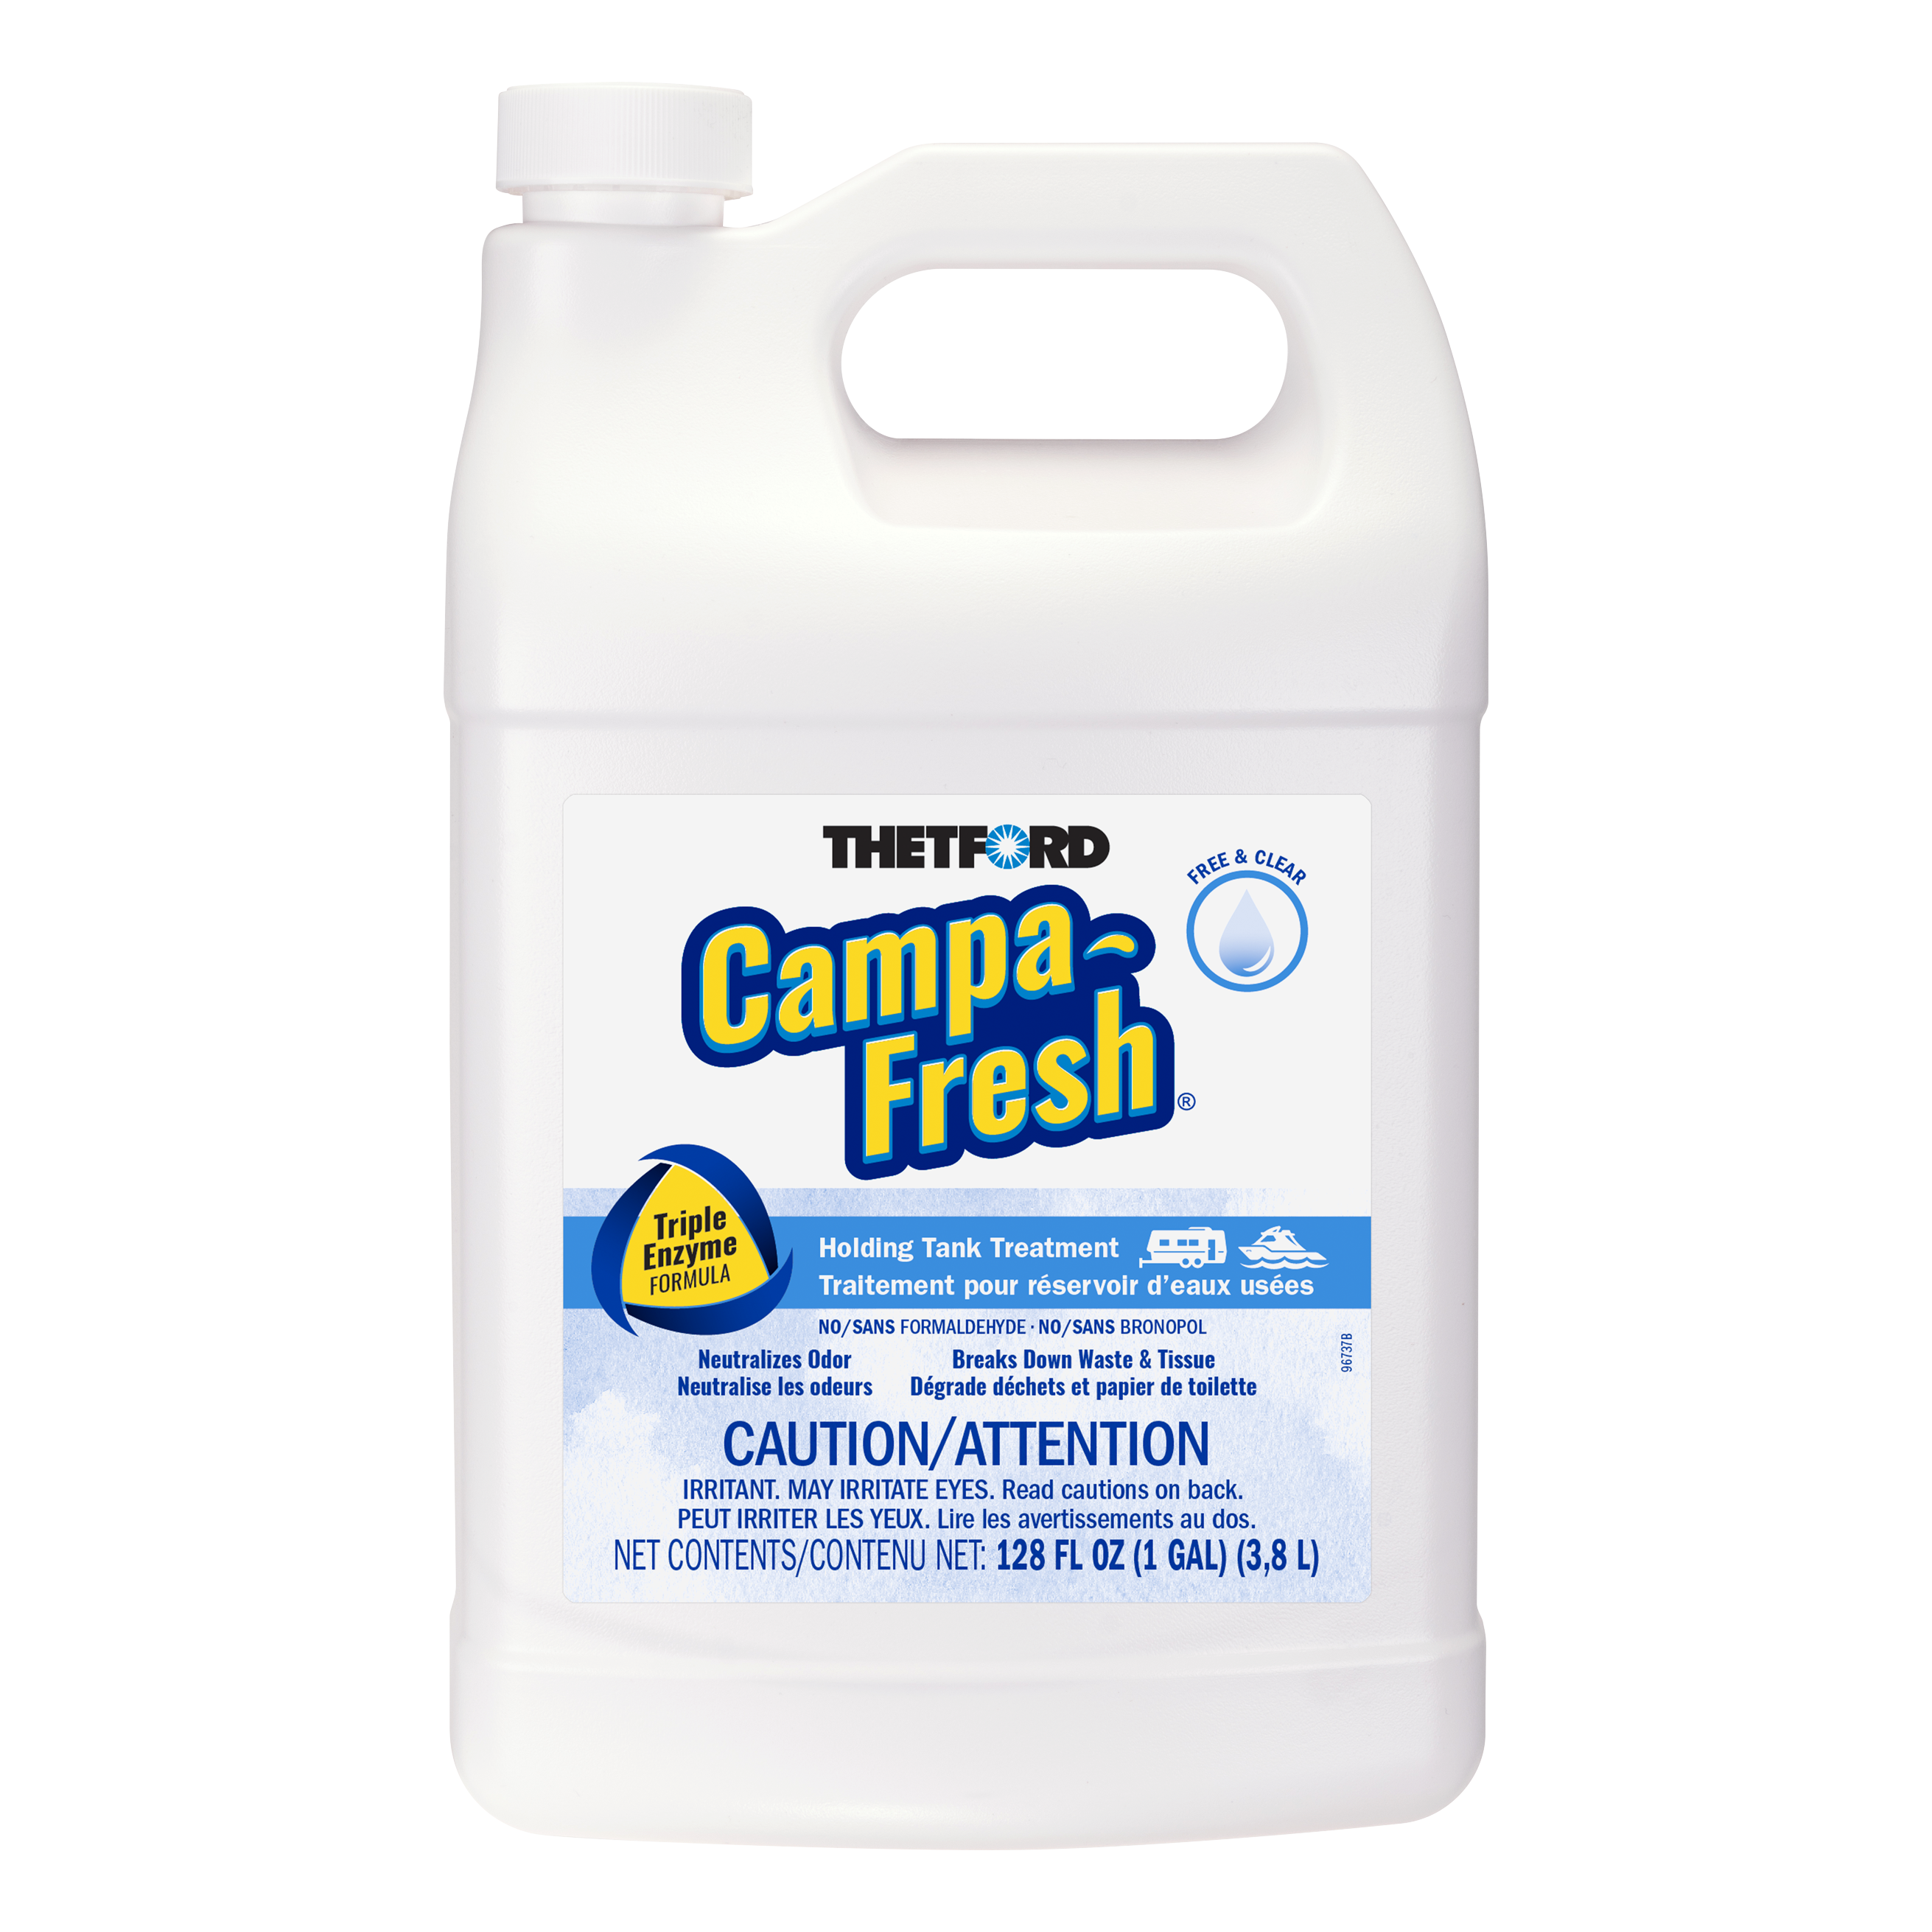 Thetford Campa-Fresh Ocean Breeze 6x8oz Liquid Holding Tank Treatment 